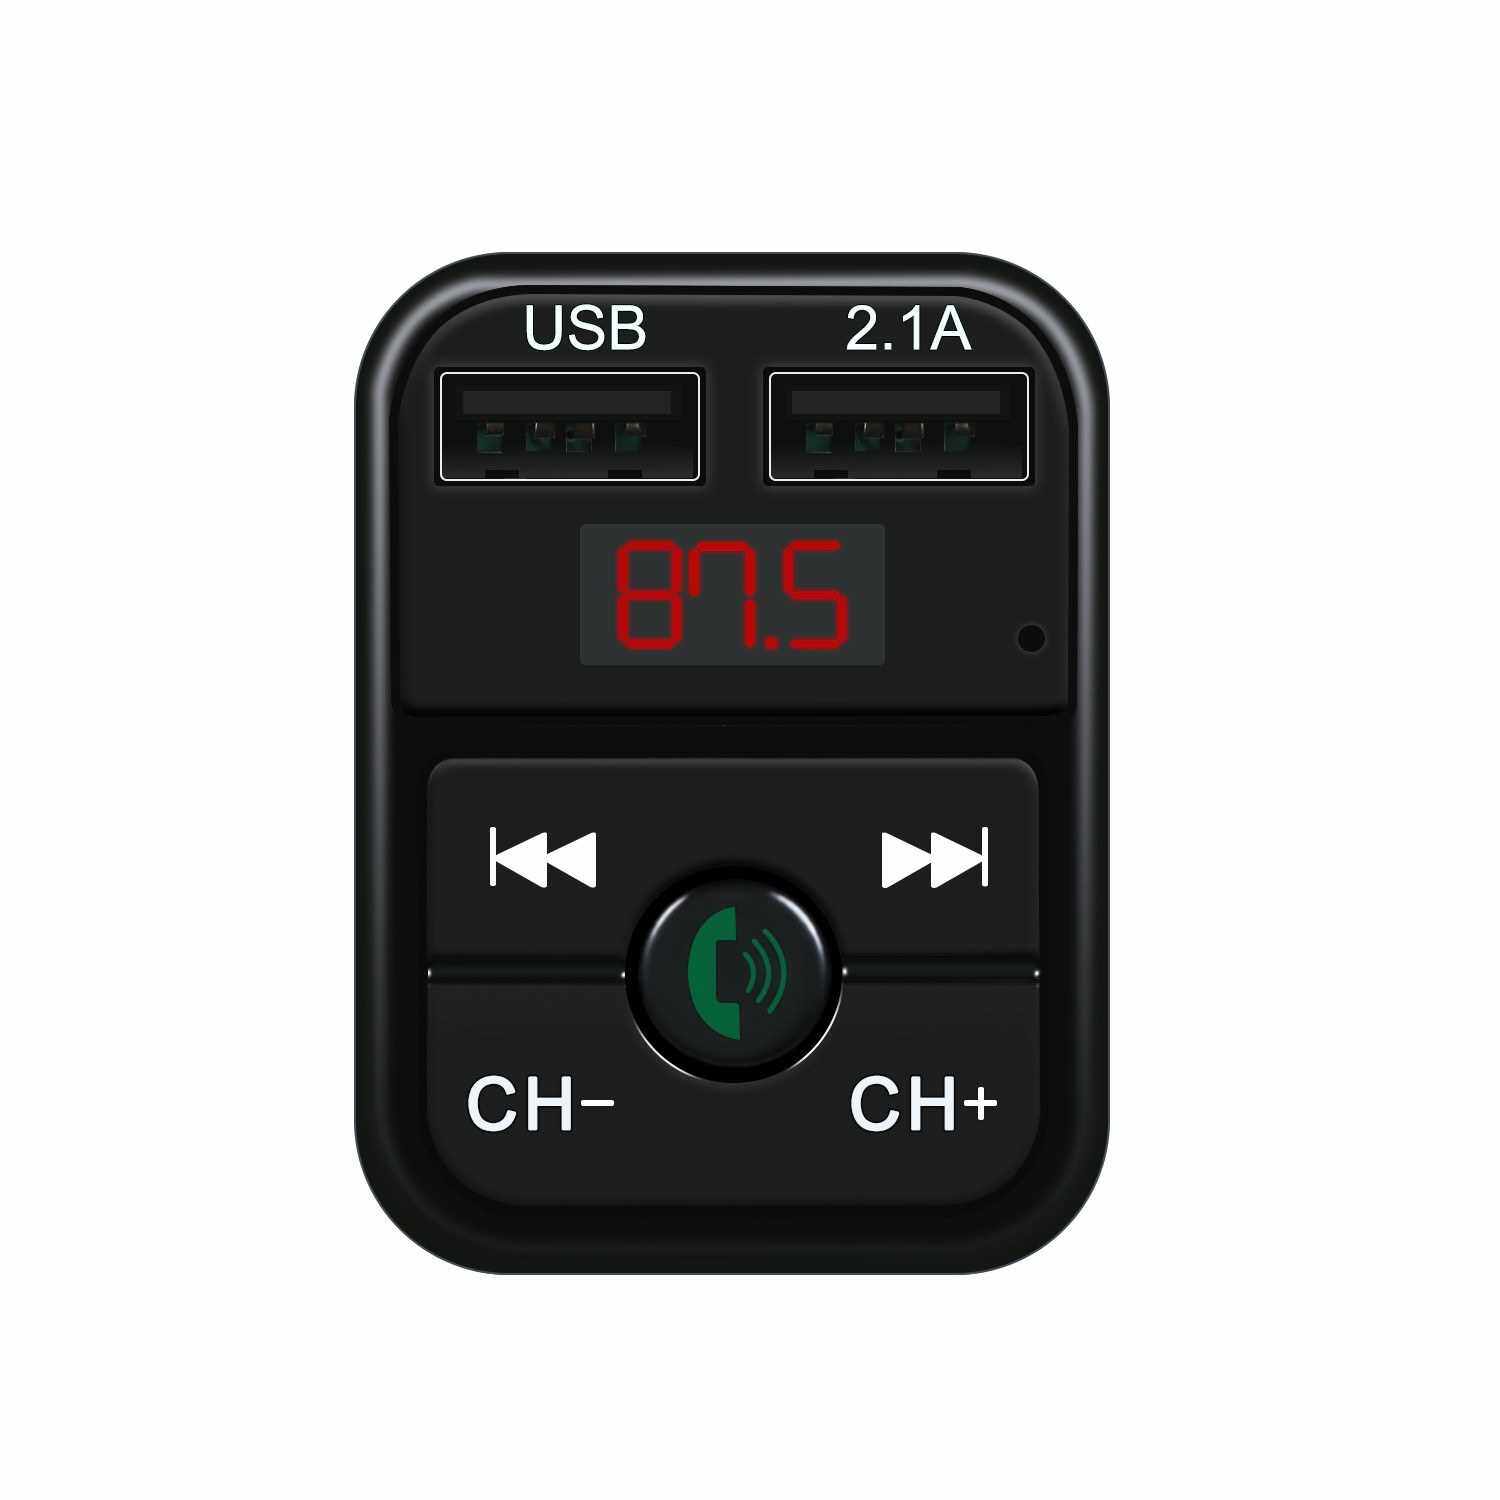 Car MP3/WAV Music Player BT 5.0 FM Transmitter Wireless Handsfree Audio Receiver Dual USB Chargers (Black)